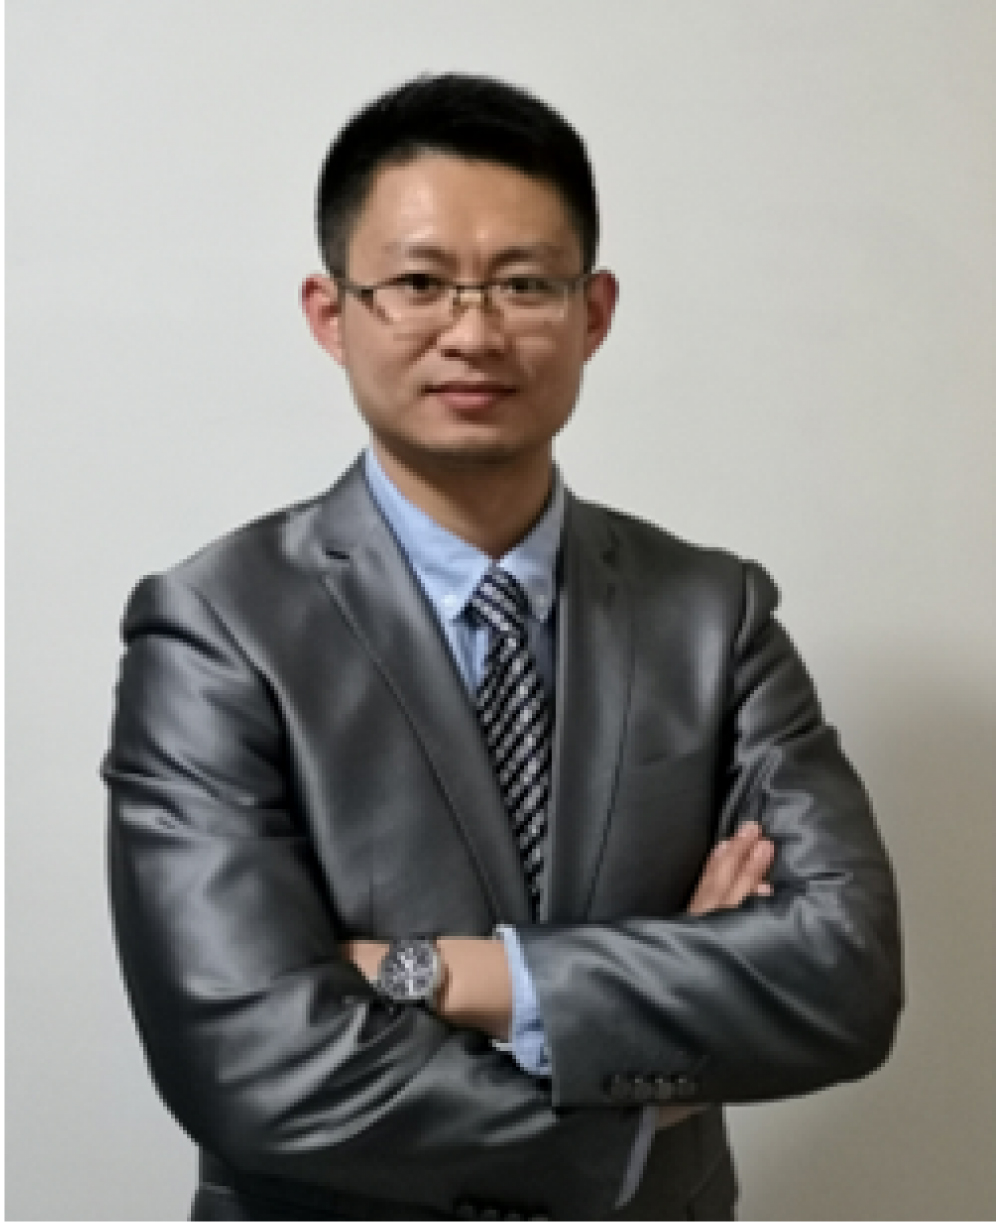 Dr. Xu Dong